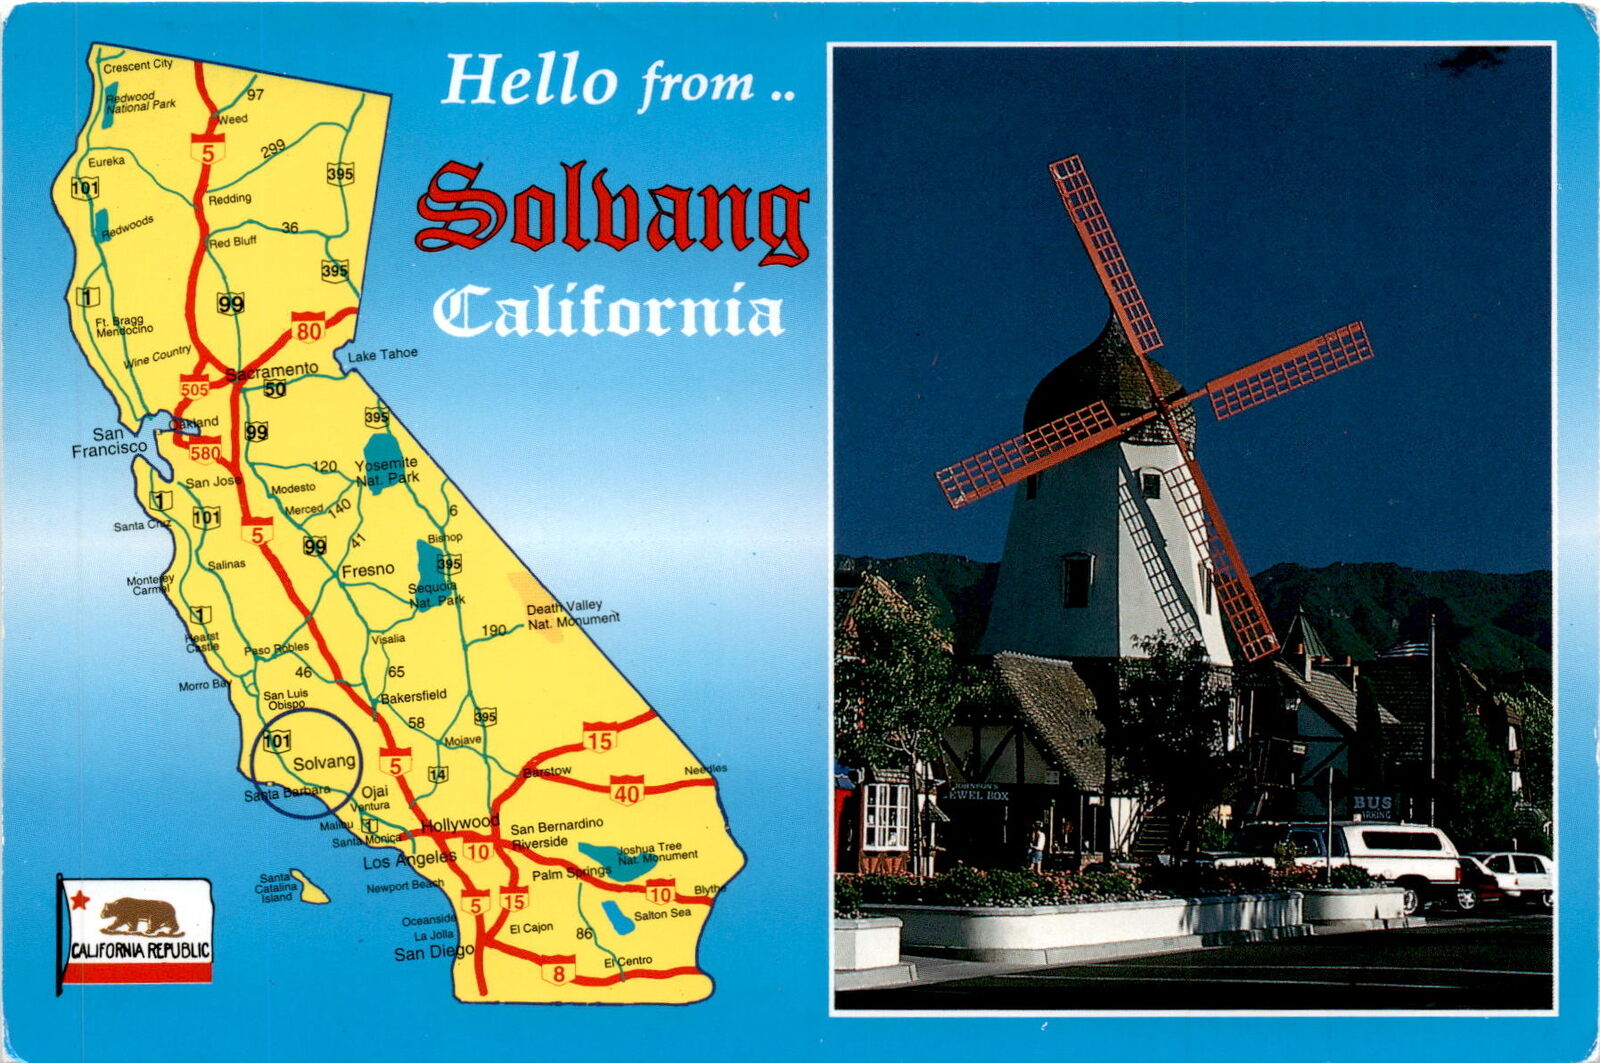 Solvang, California, Denmark, Danish architecture, windmills, bakeries, postcard